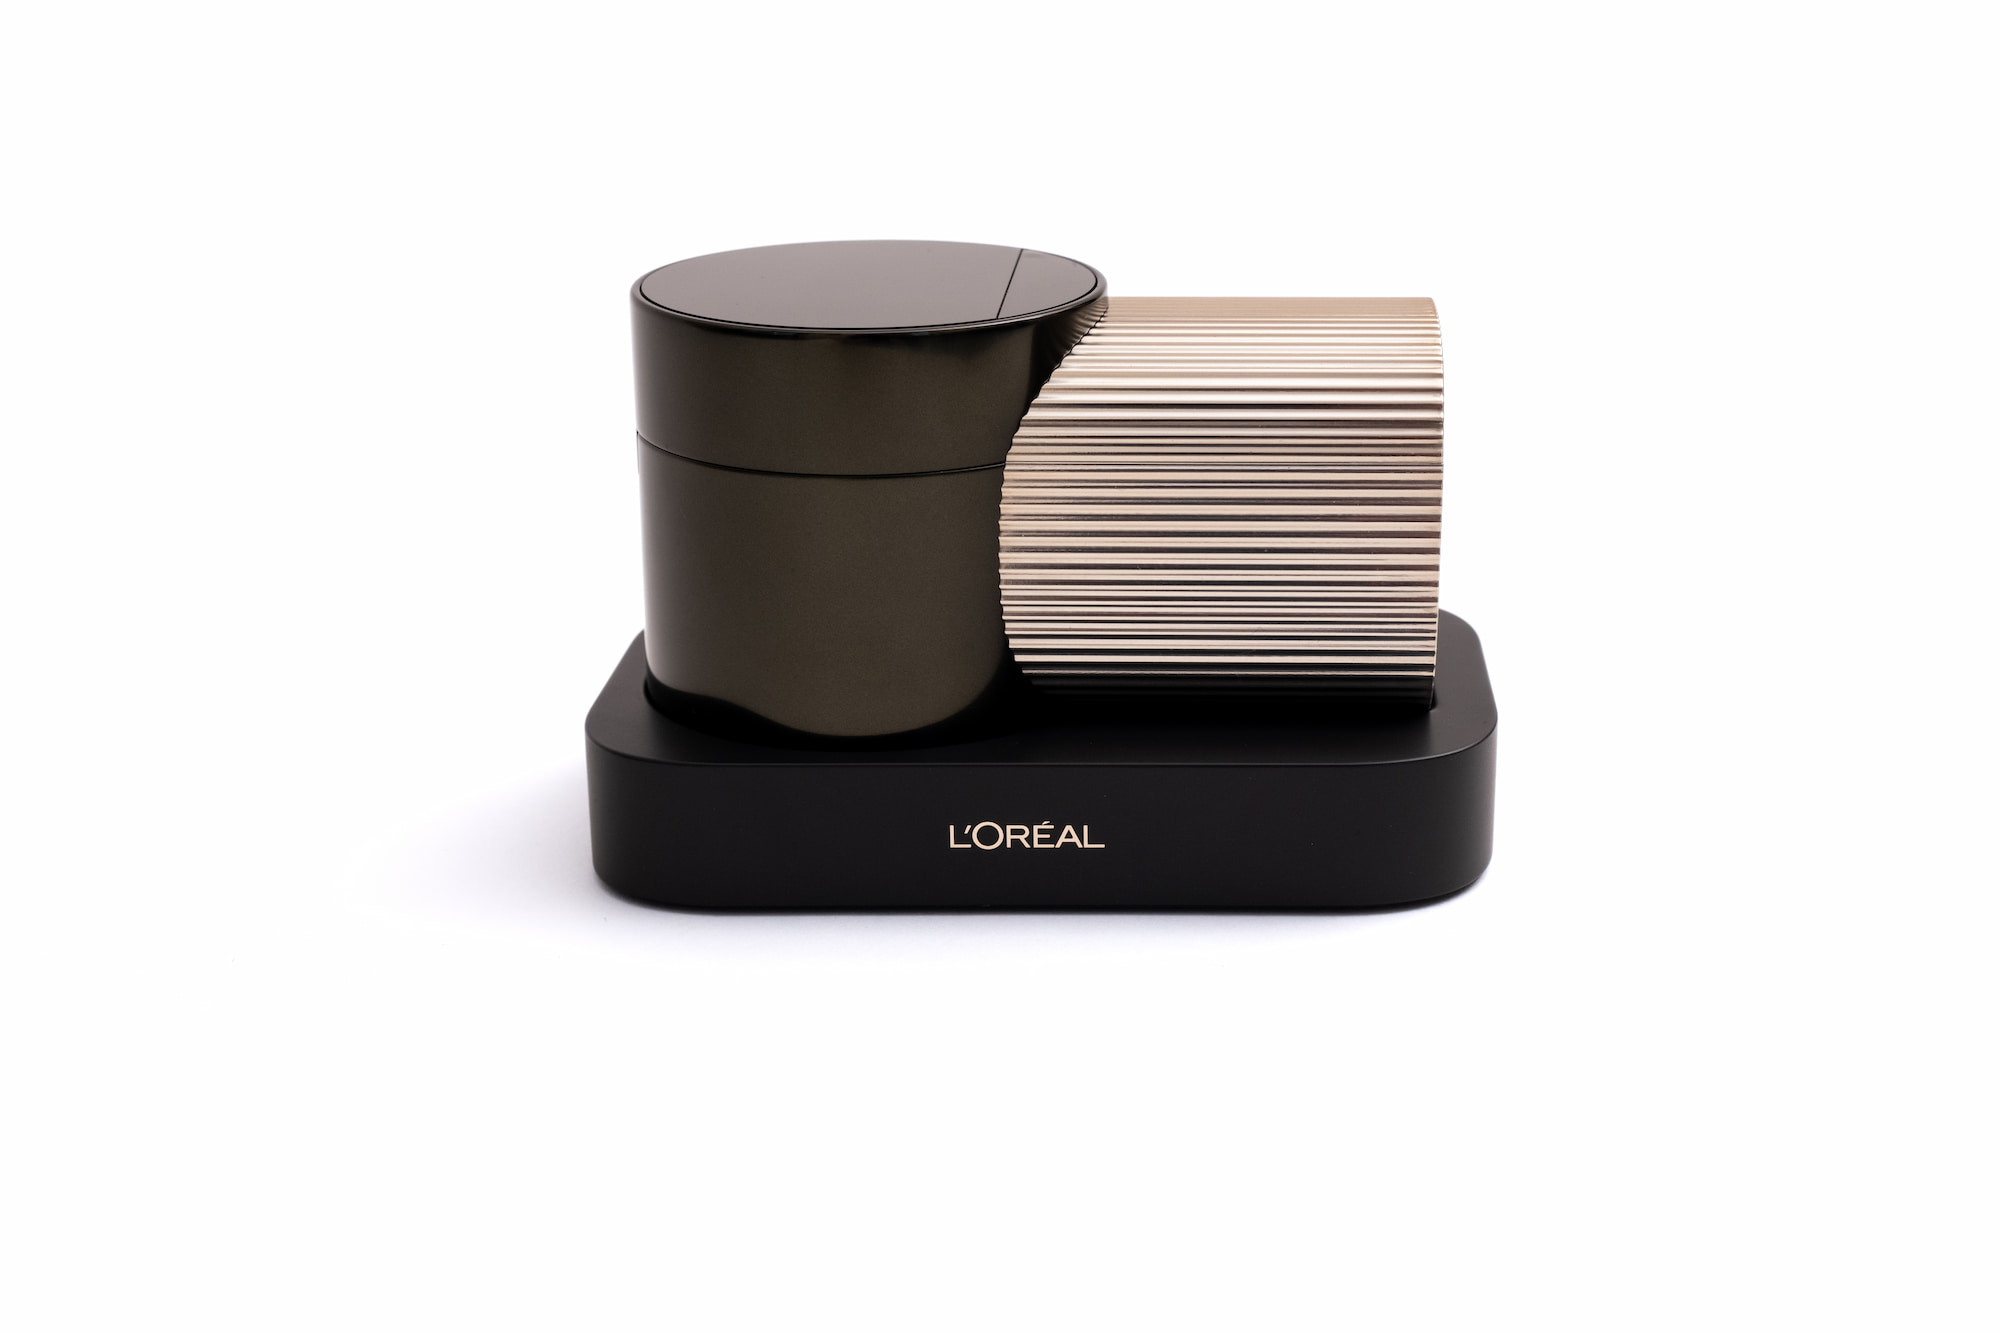 L’Oréal's Brow Magic device